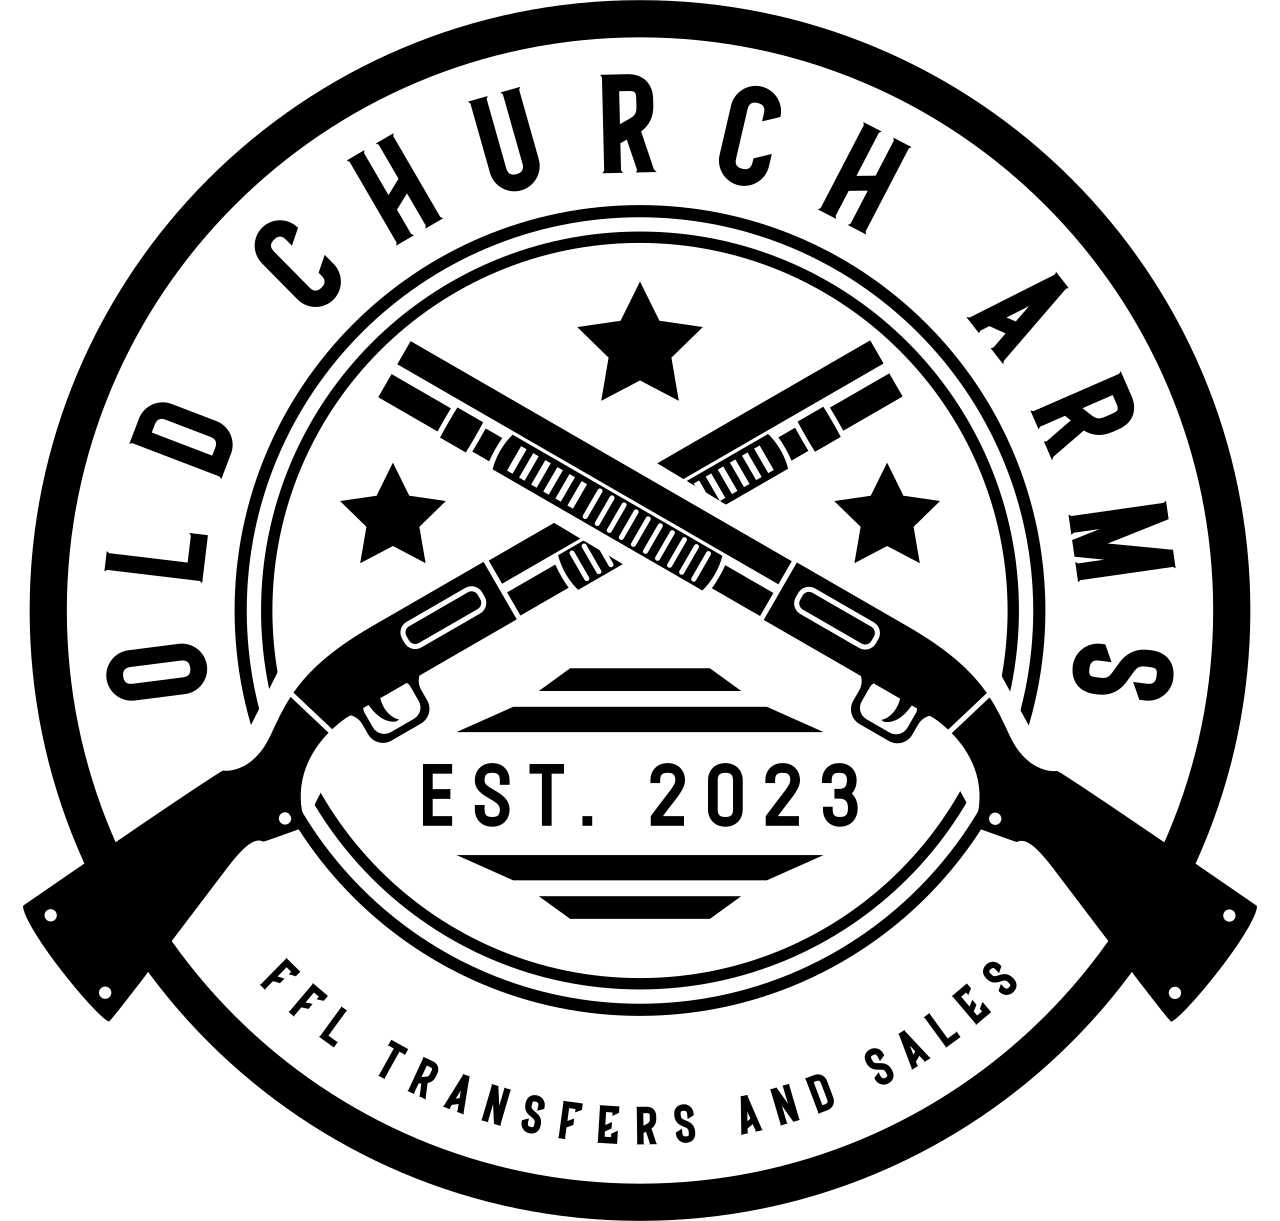 OLD CHURCH ARMS's logo